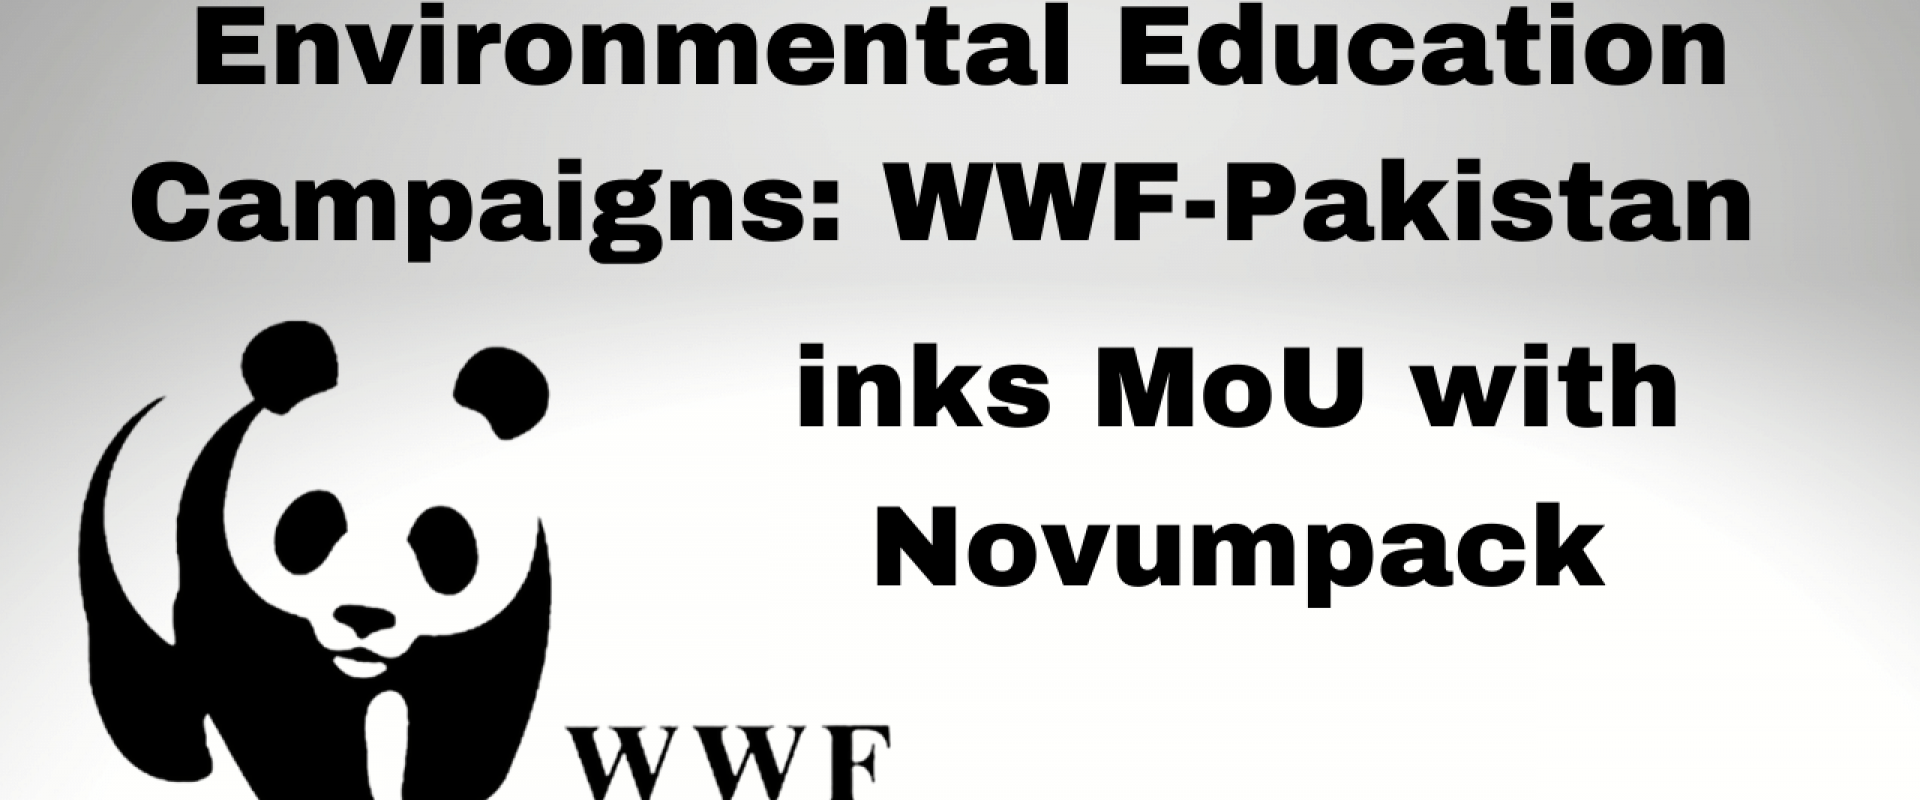 Environmental education campaigns WWF-Pakistan inks MoU with Novumpack (1)